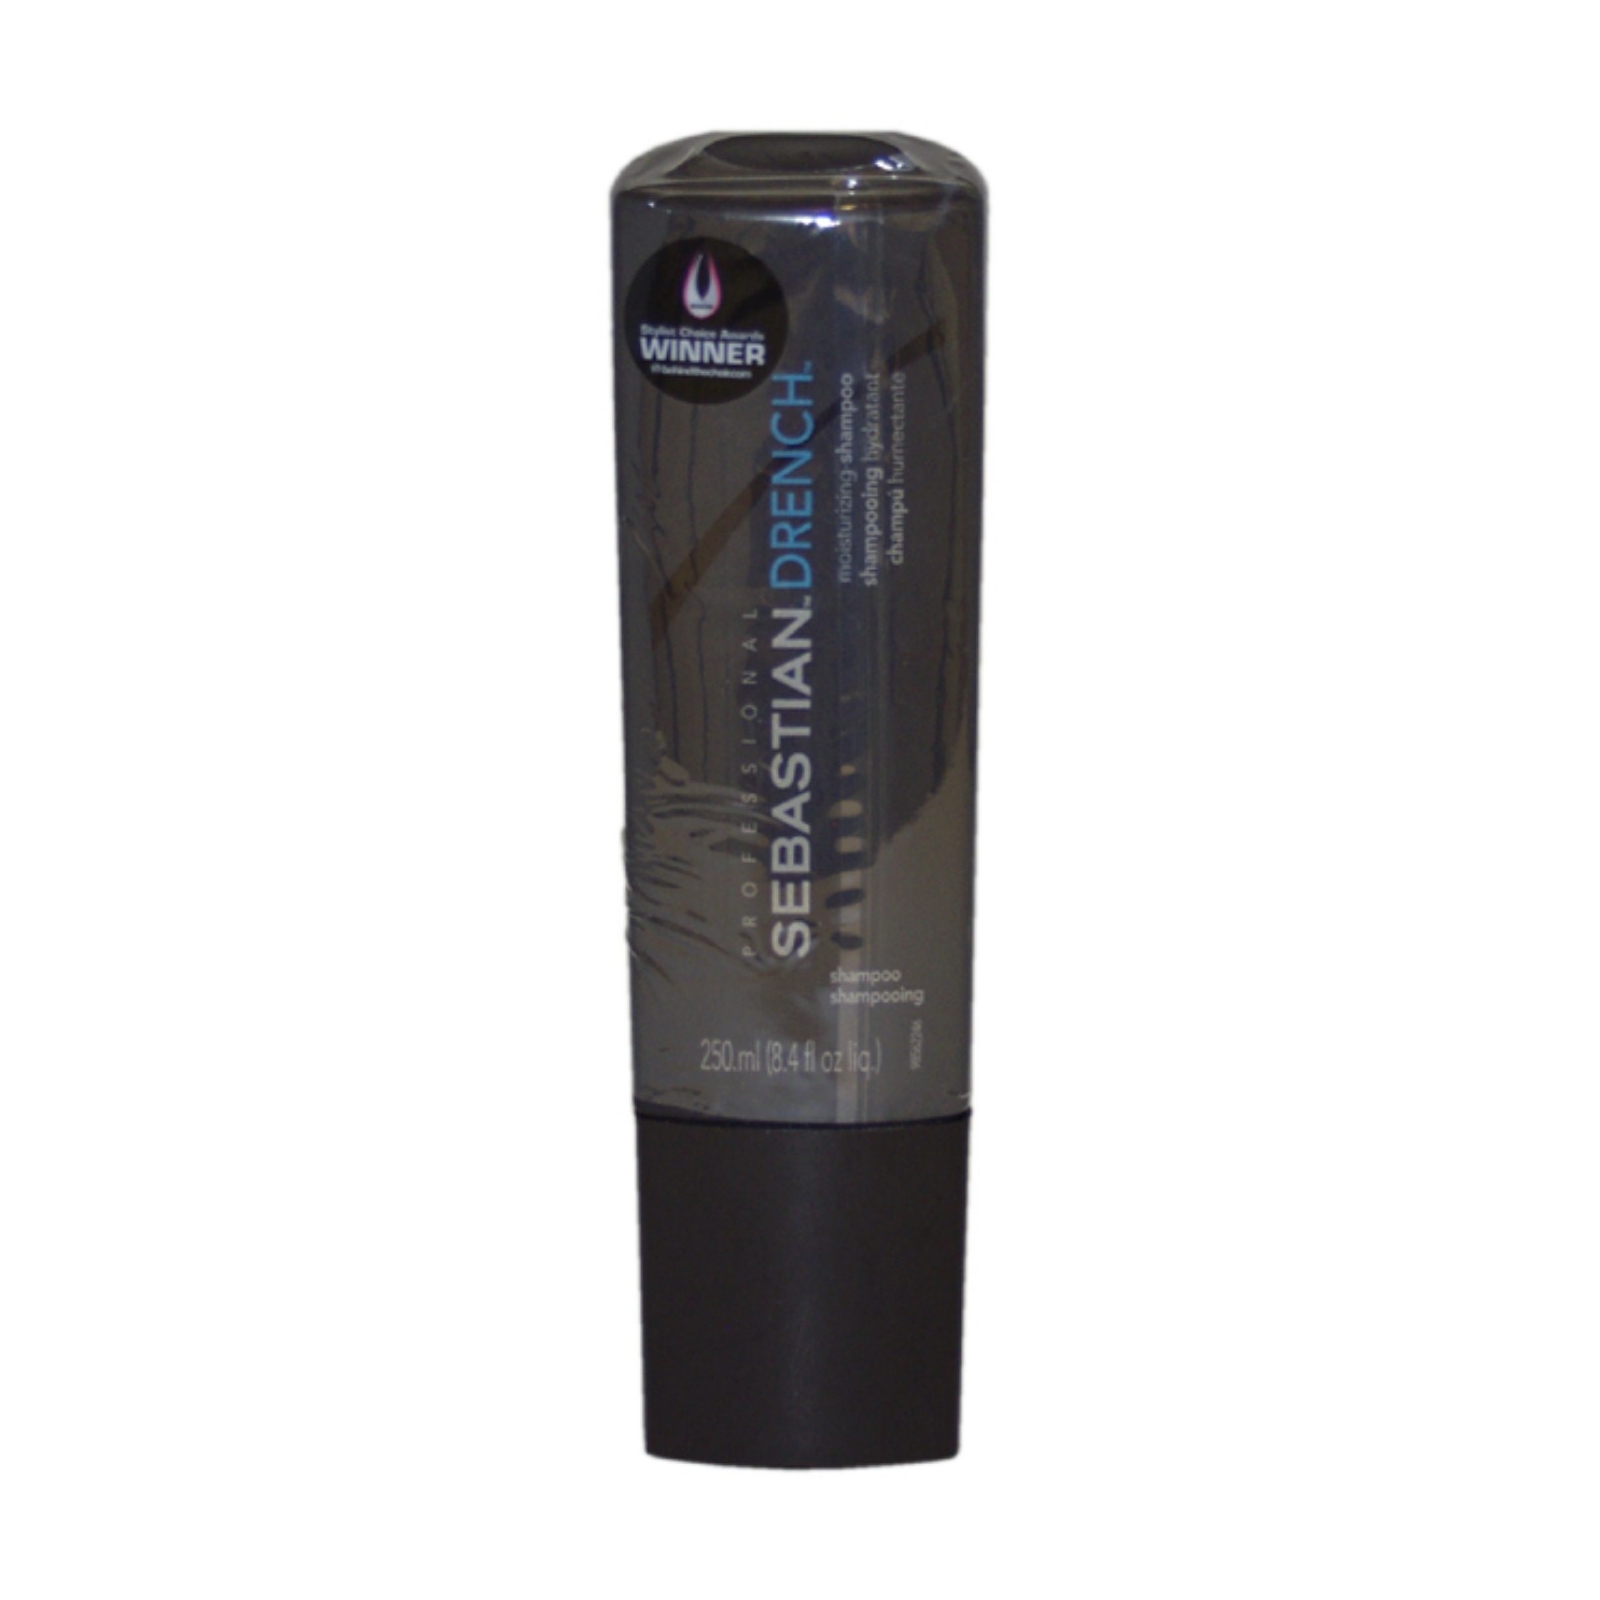 Sebastian Professional Drench Moisturizing Shampoo by  for Unisex - 8.4 oz Shampoo